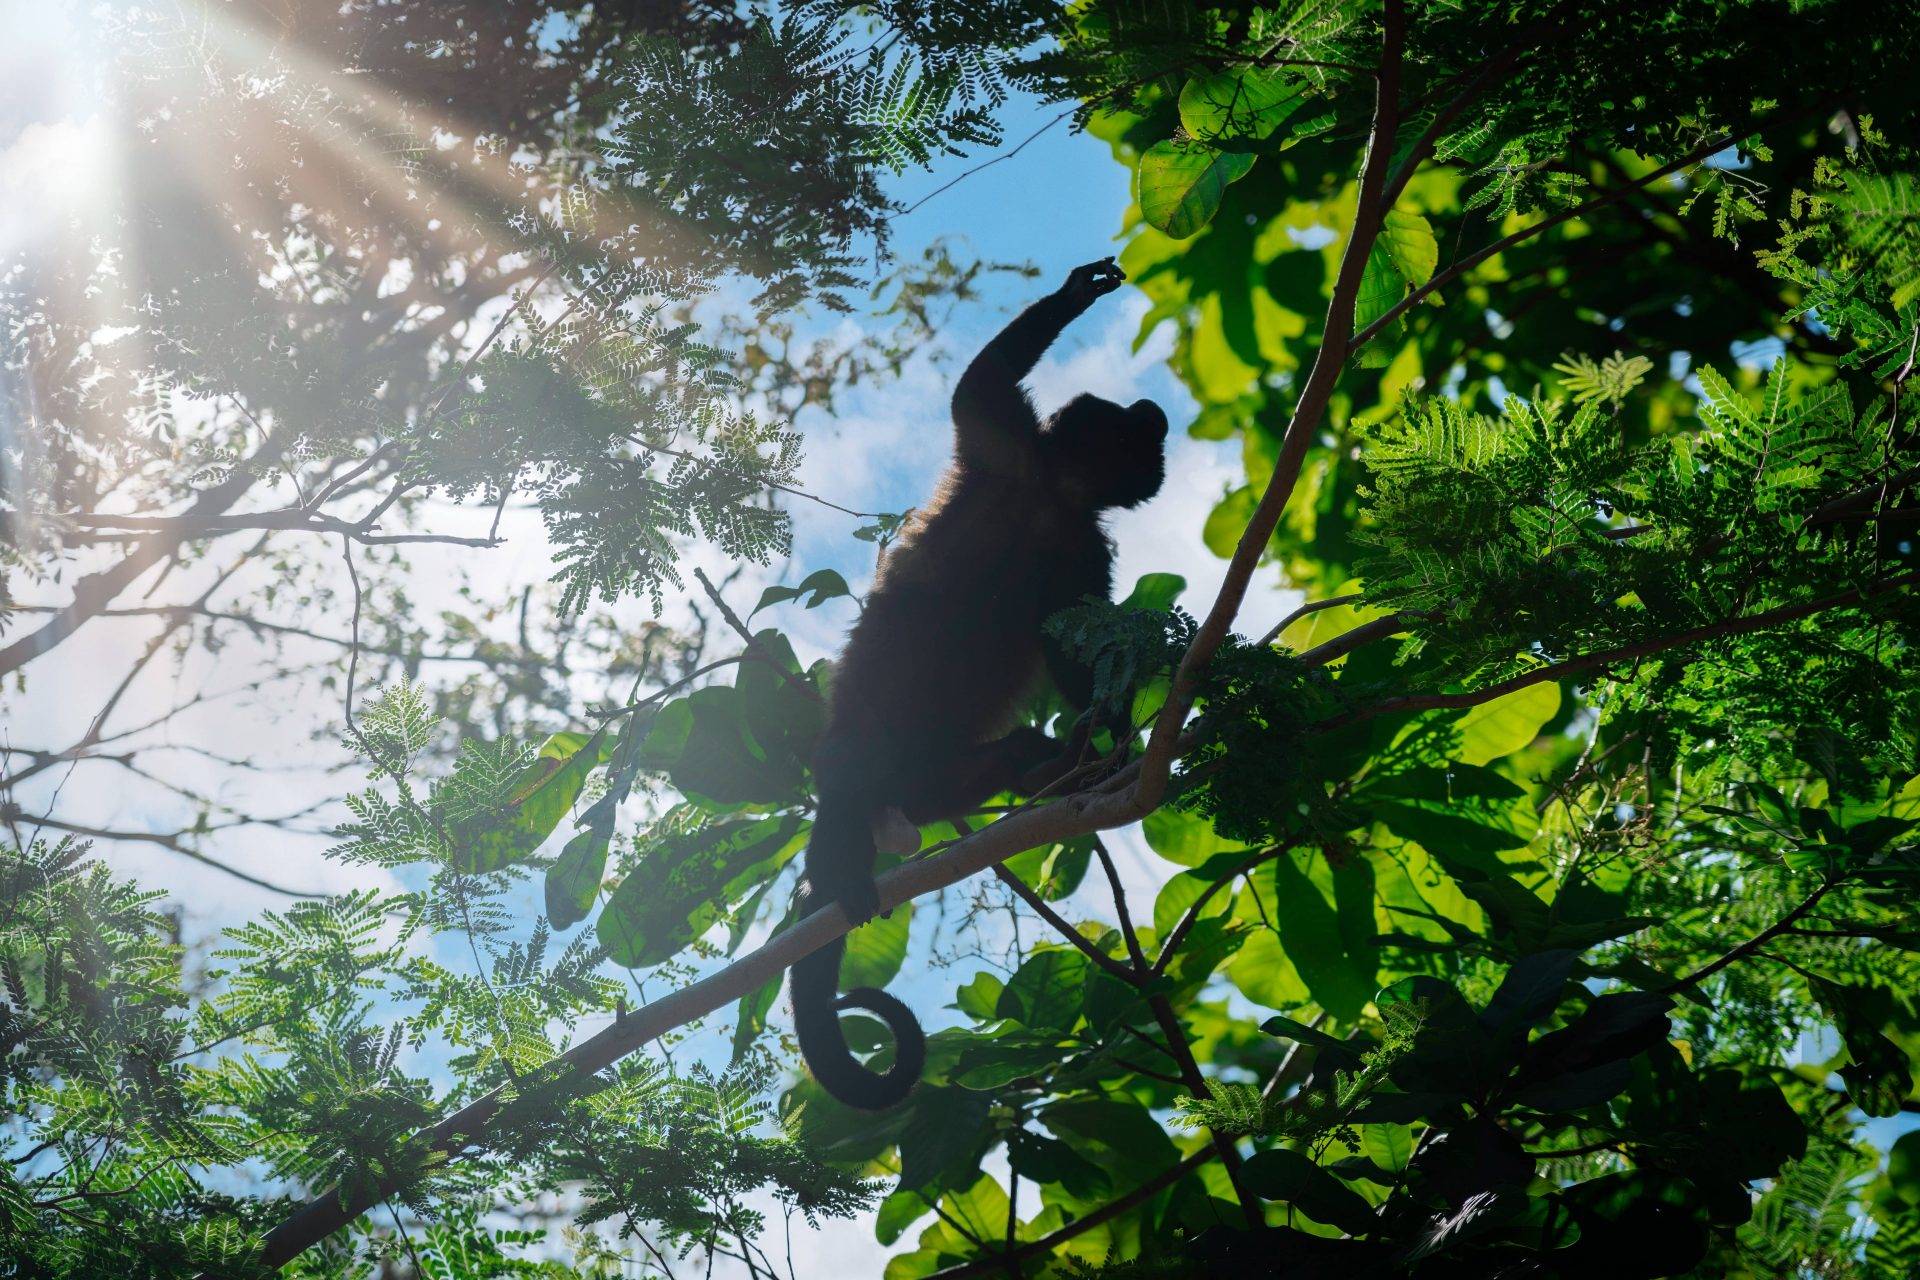 biodiversity in Costa Rica means monkeys